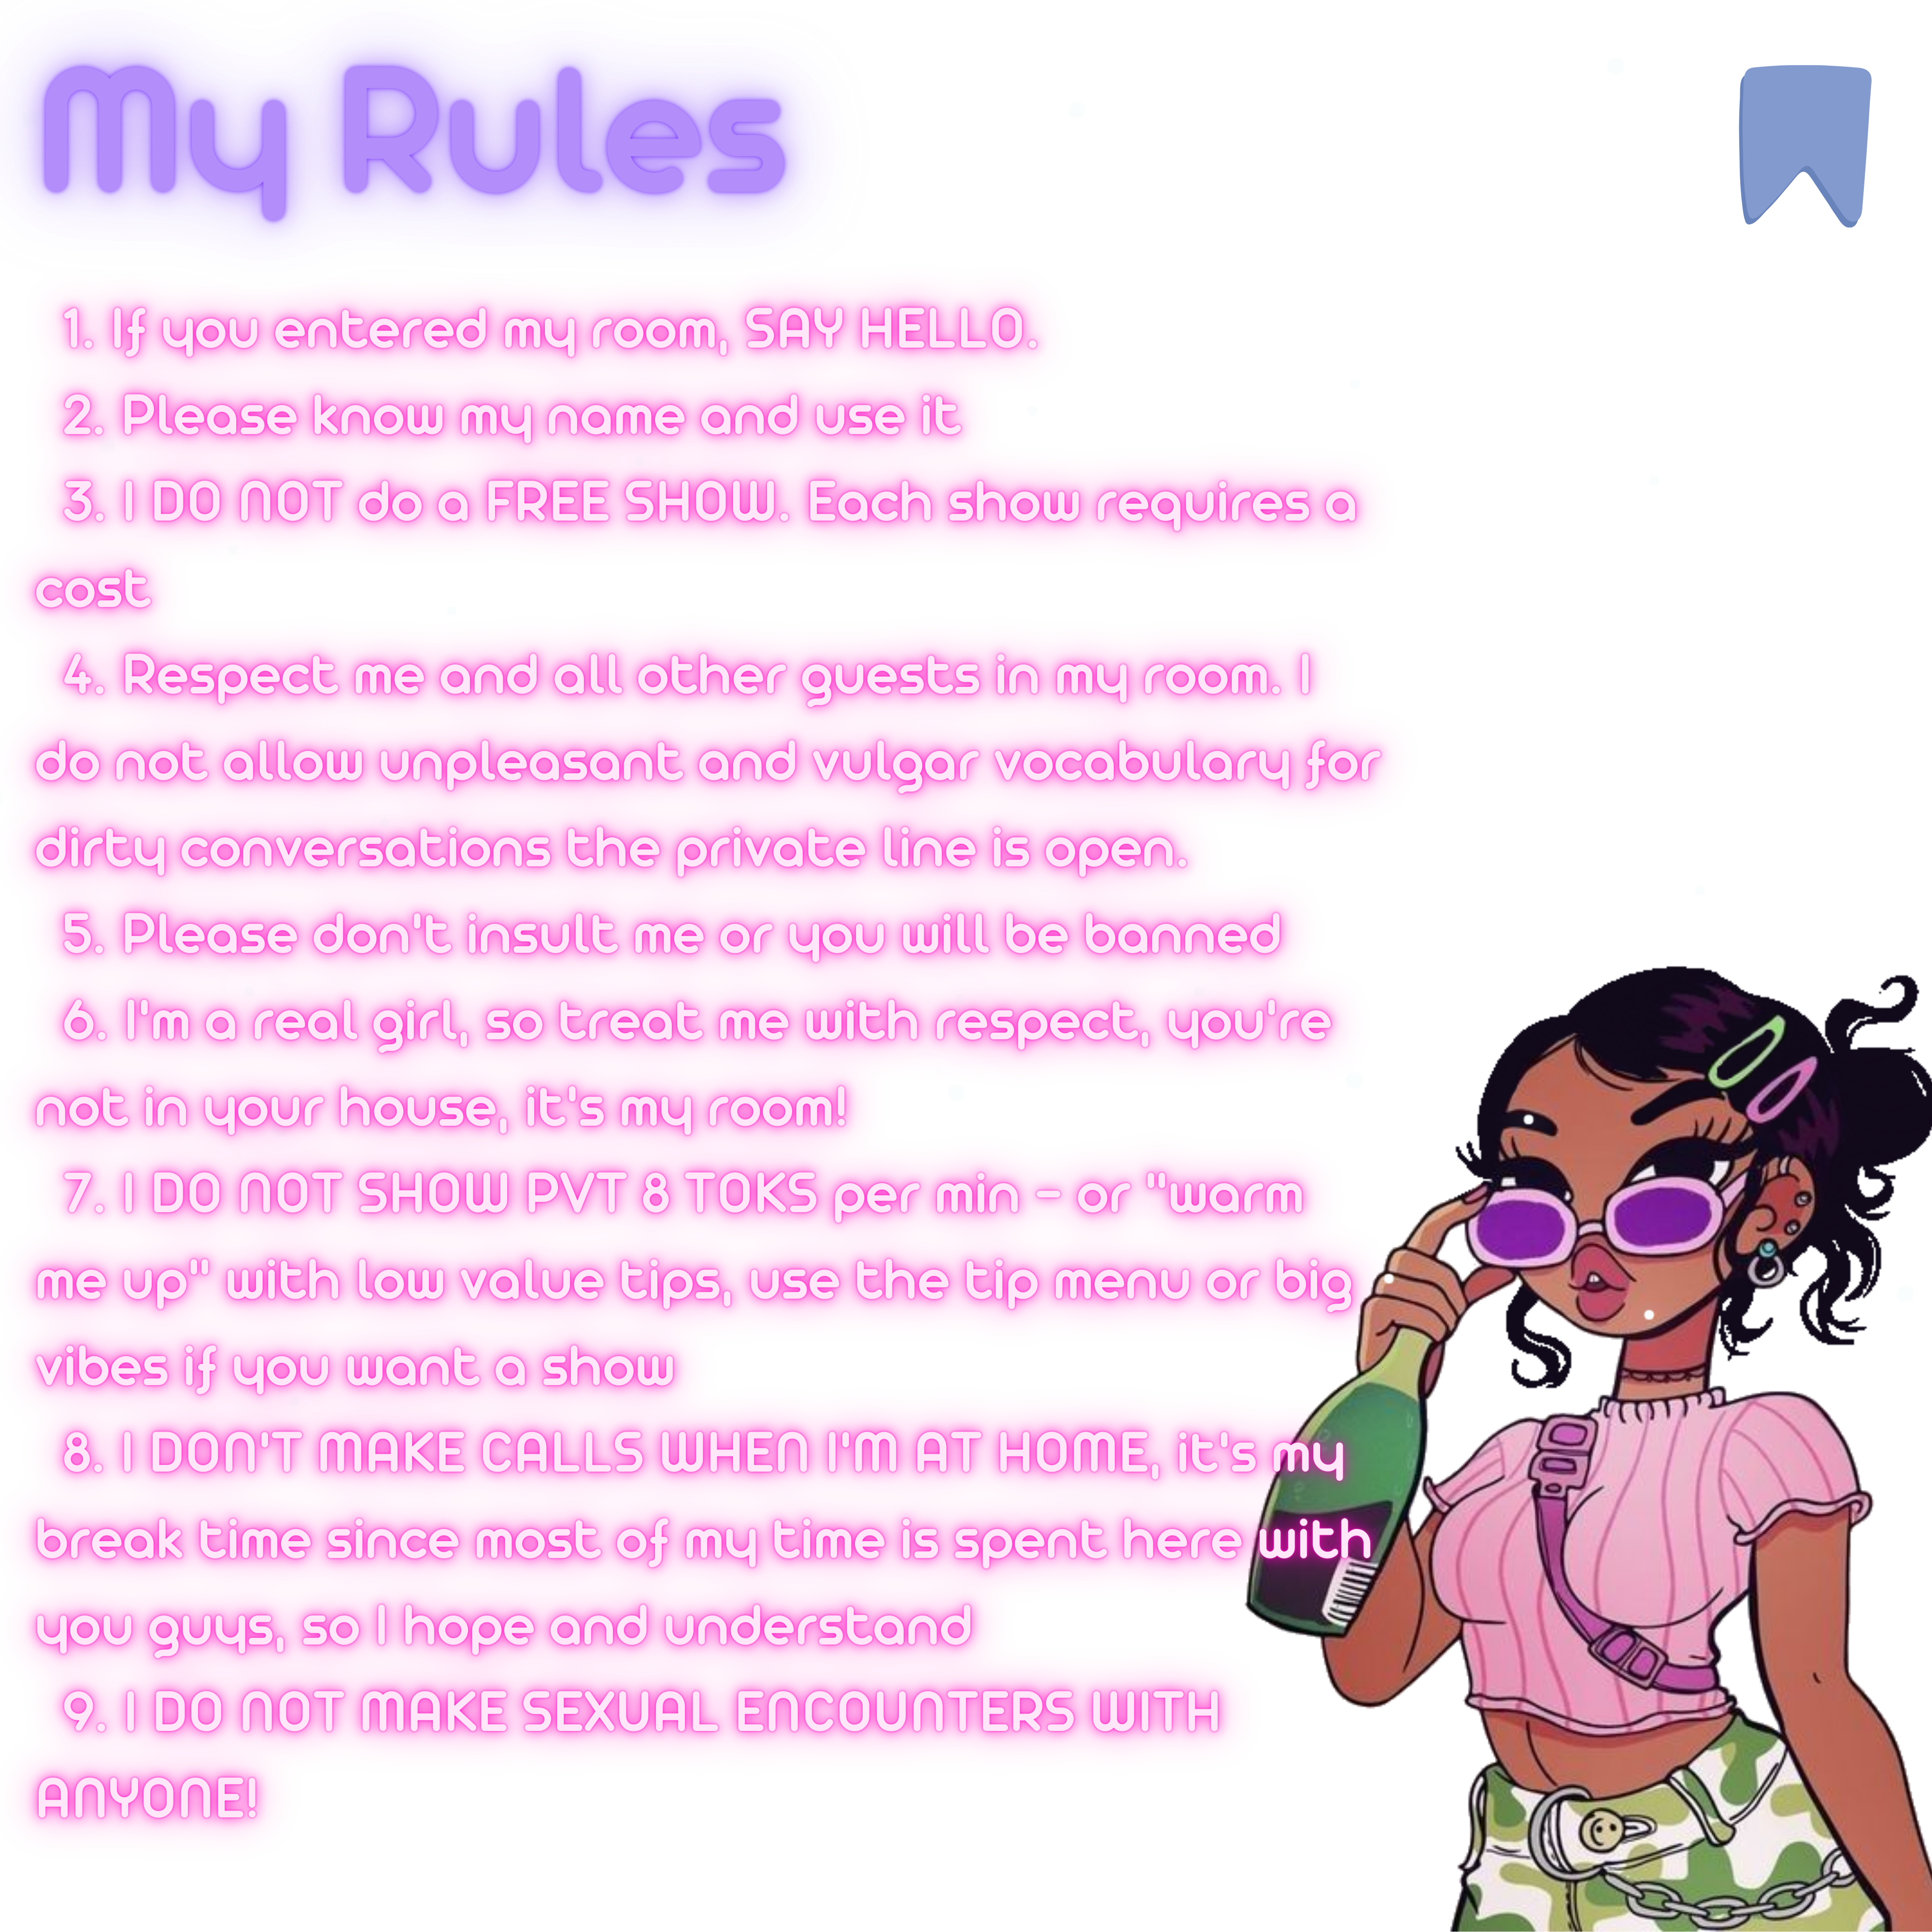 roxyjordan My rules image: 1